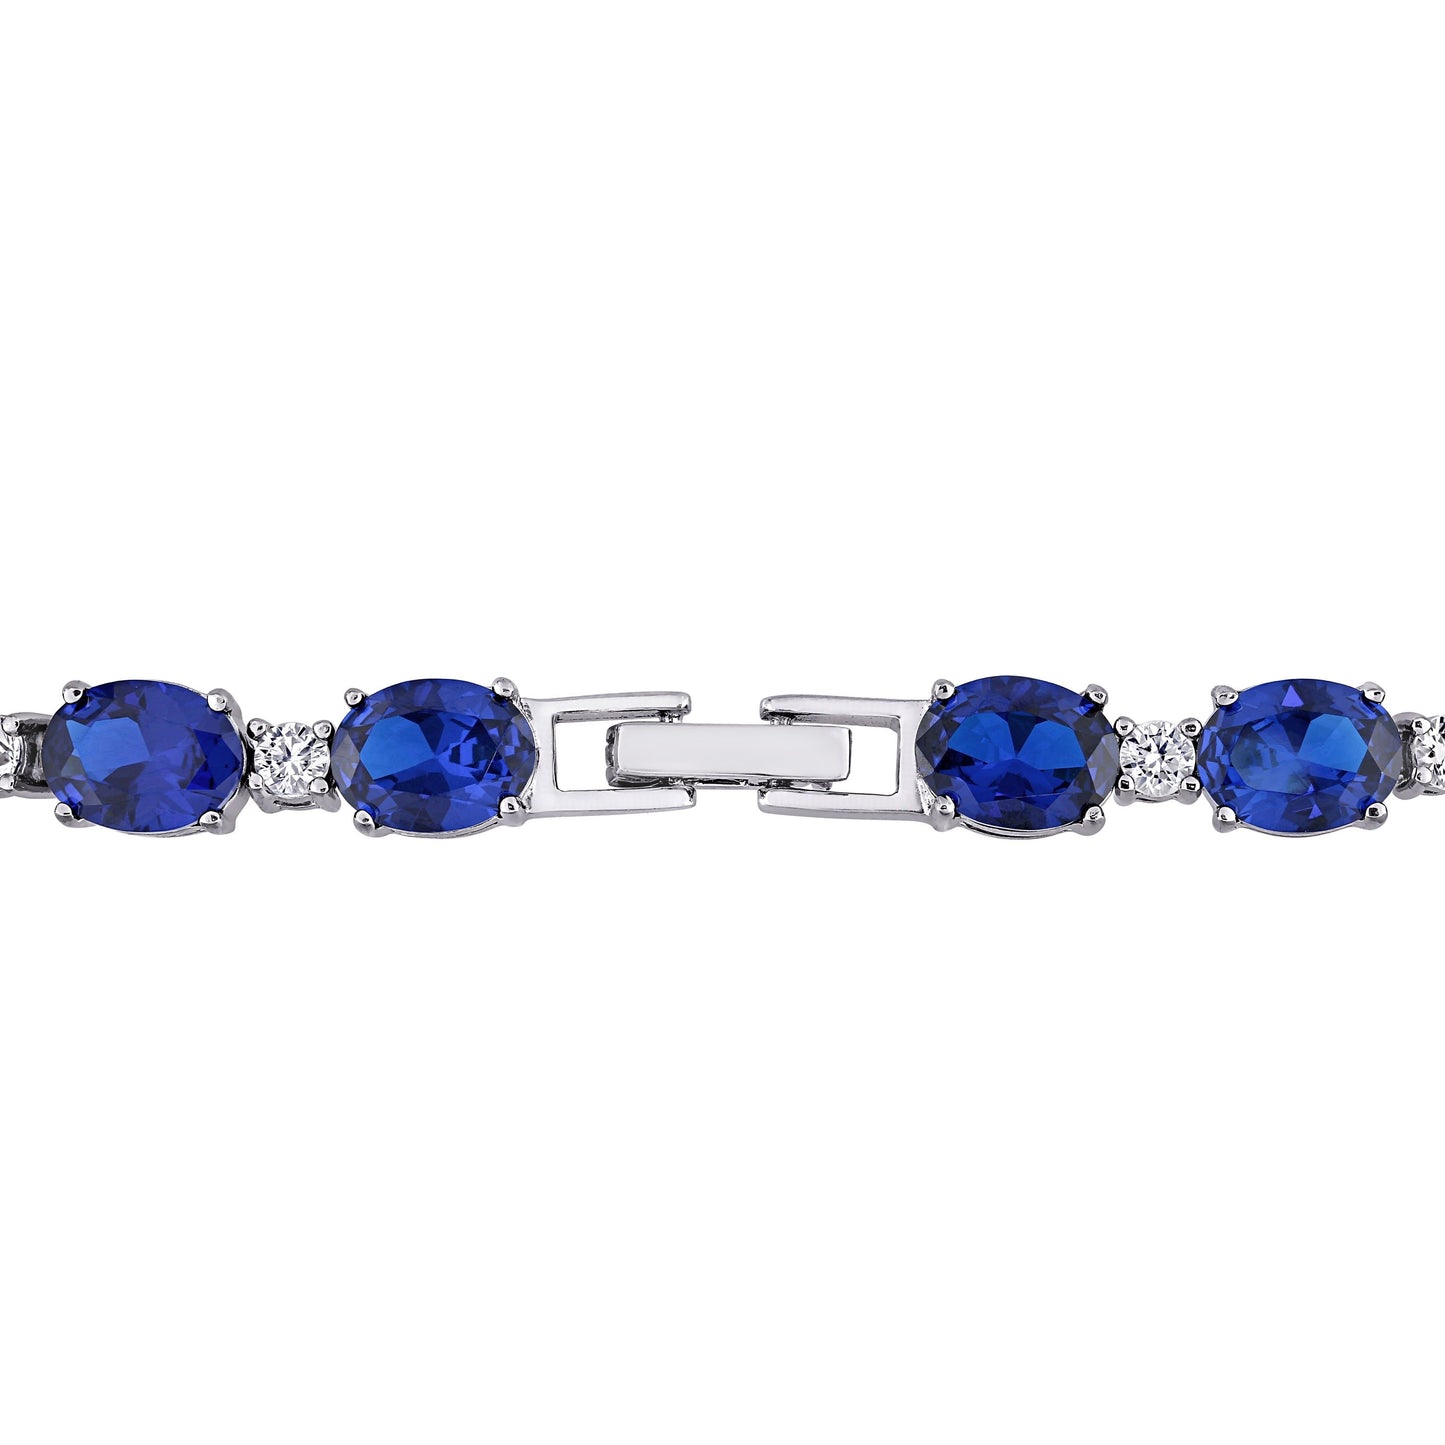 32ct Created Blue & White Sapphire Bracelet